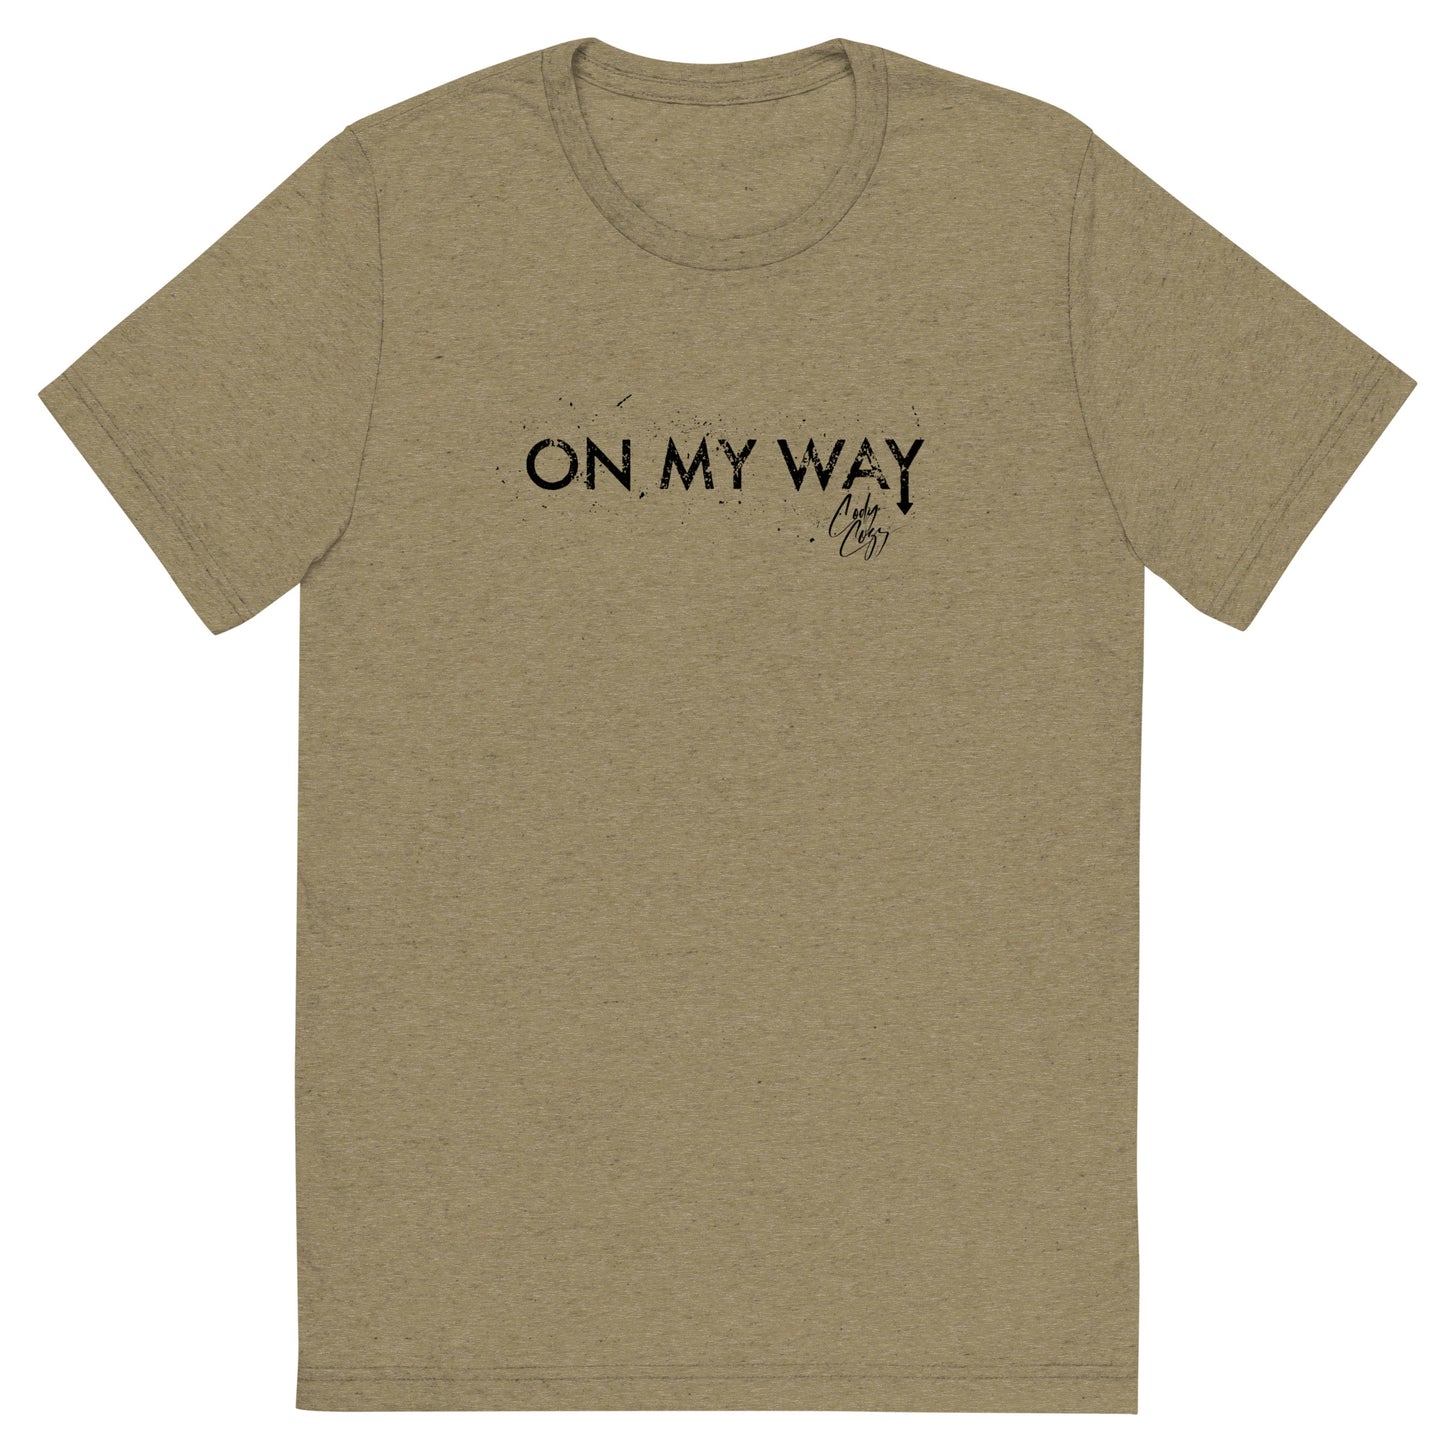 "ON MY WAY" - Tee